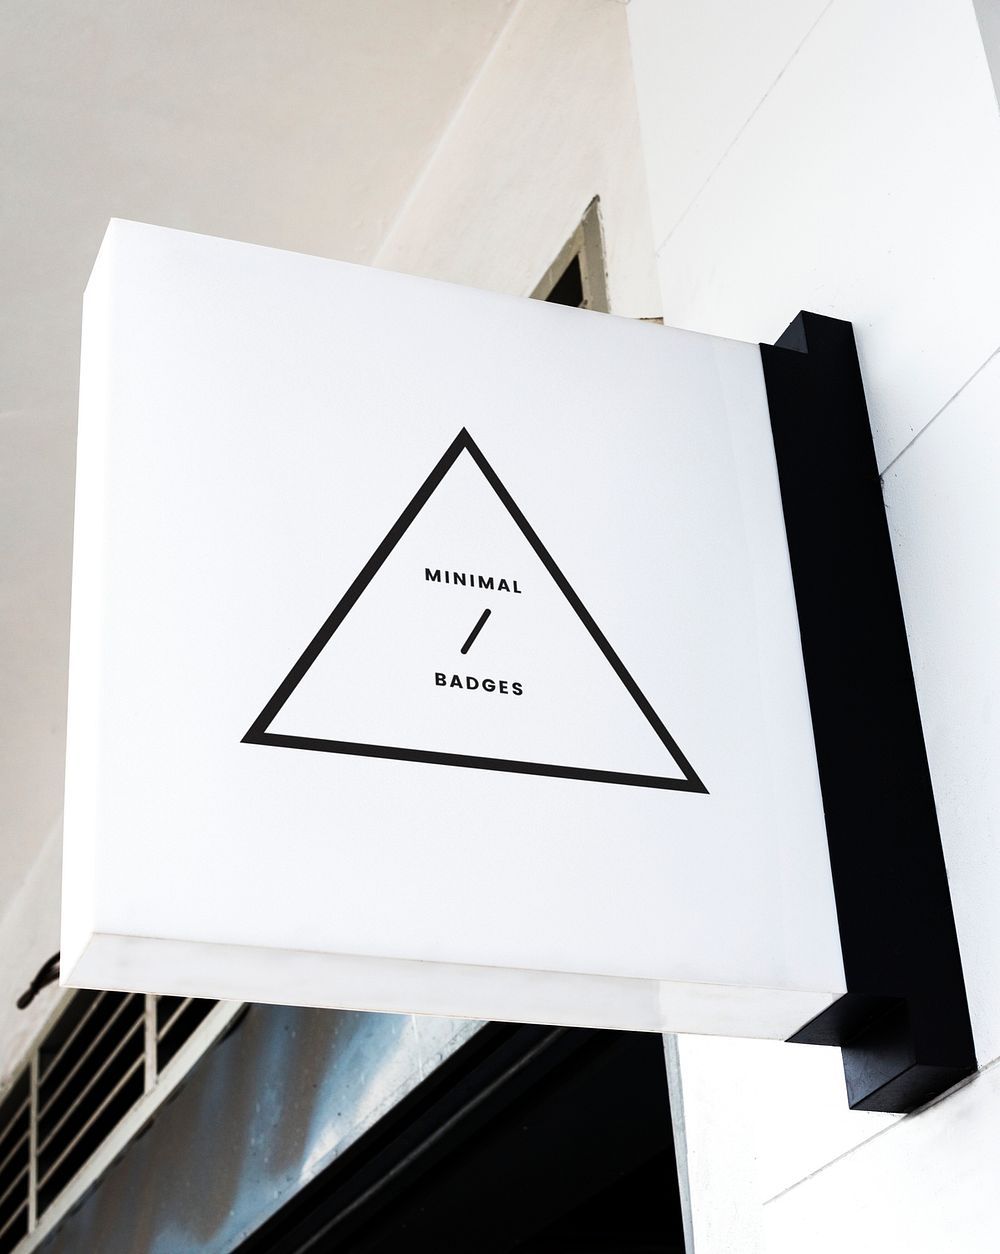 Minimal triangular badge on a white sign mockup